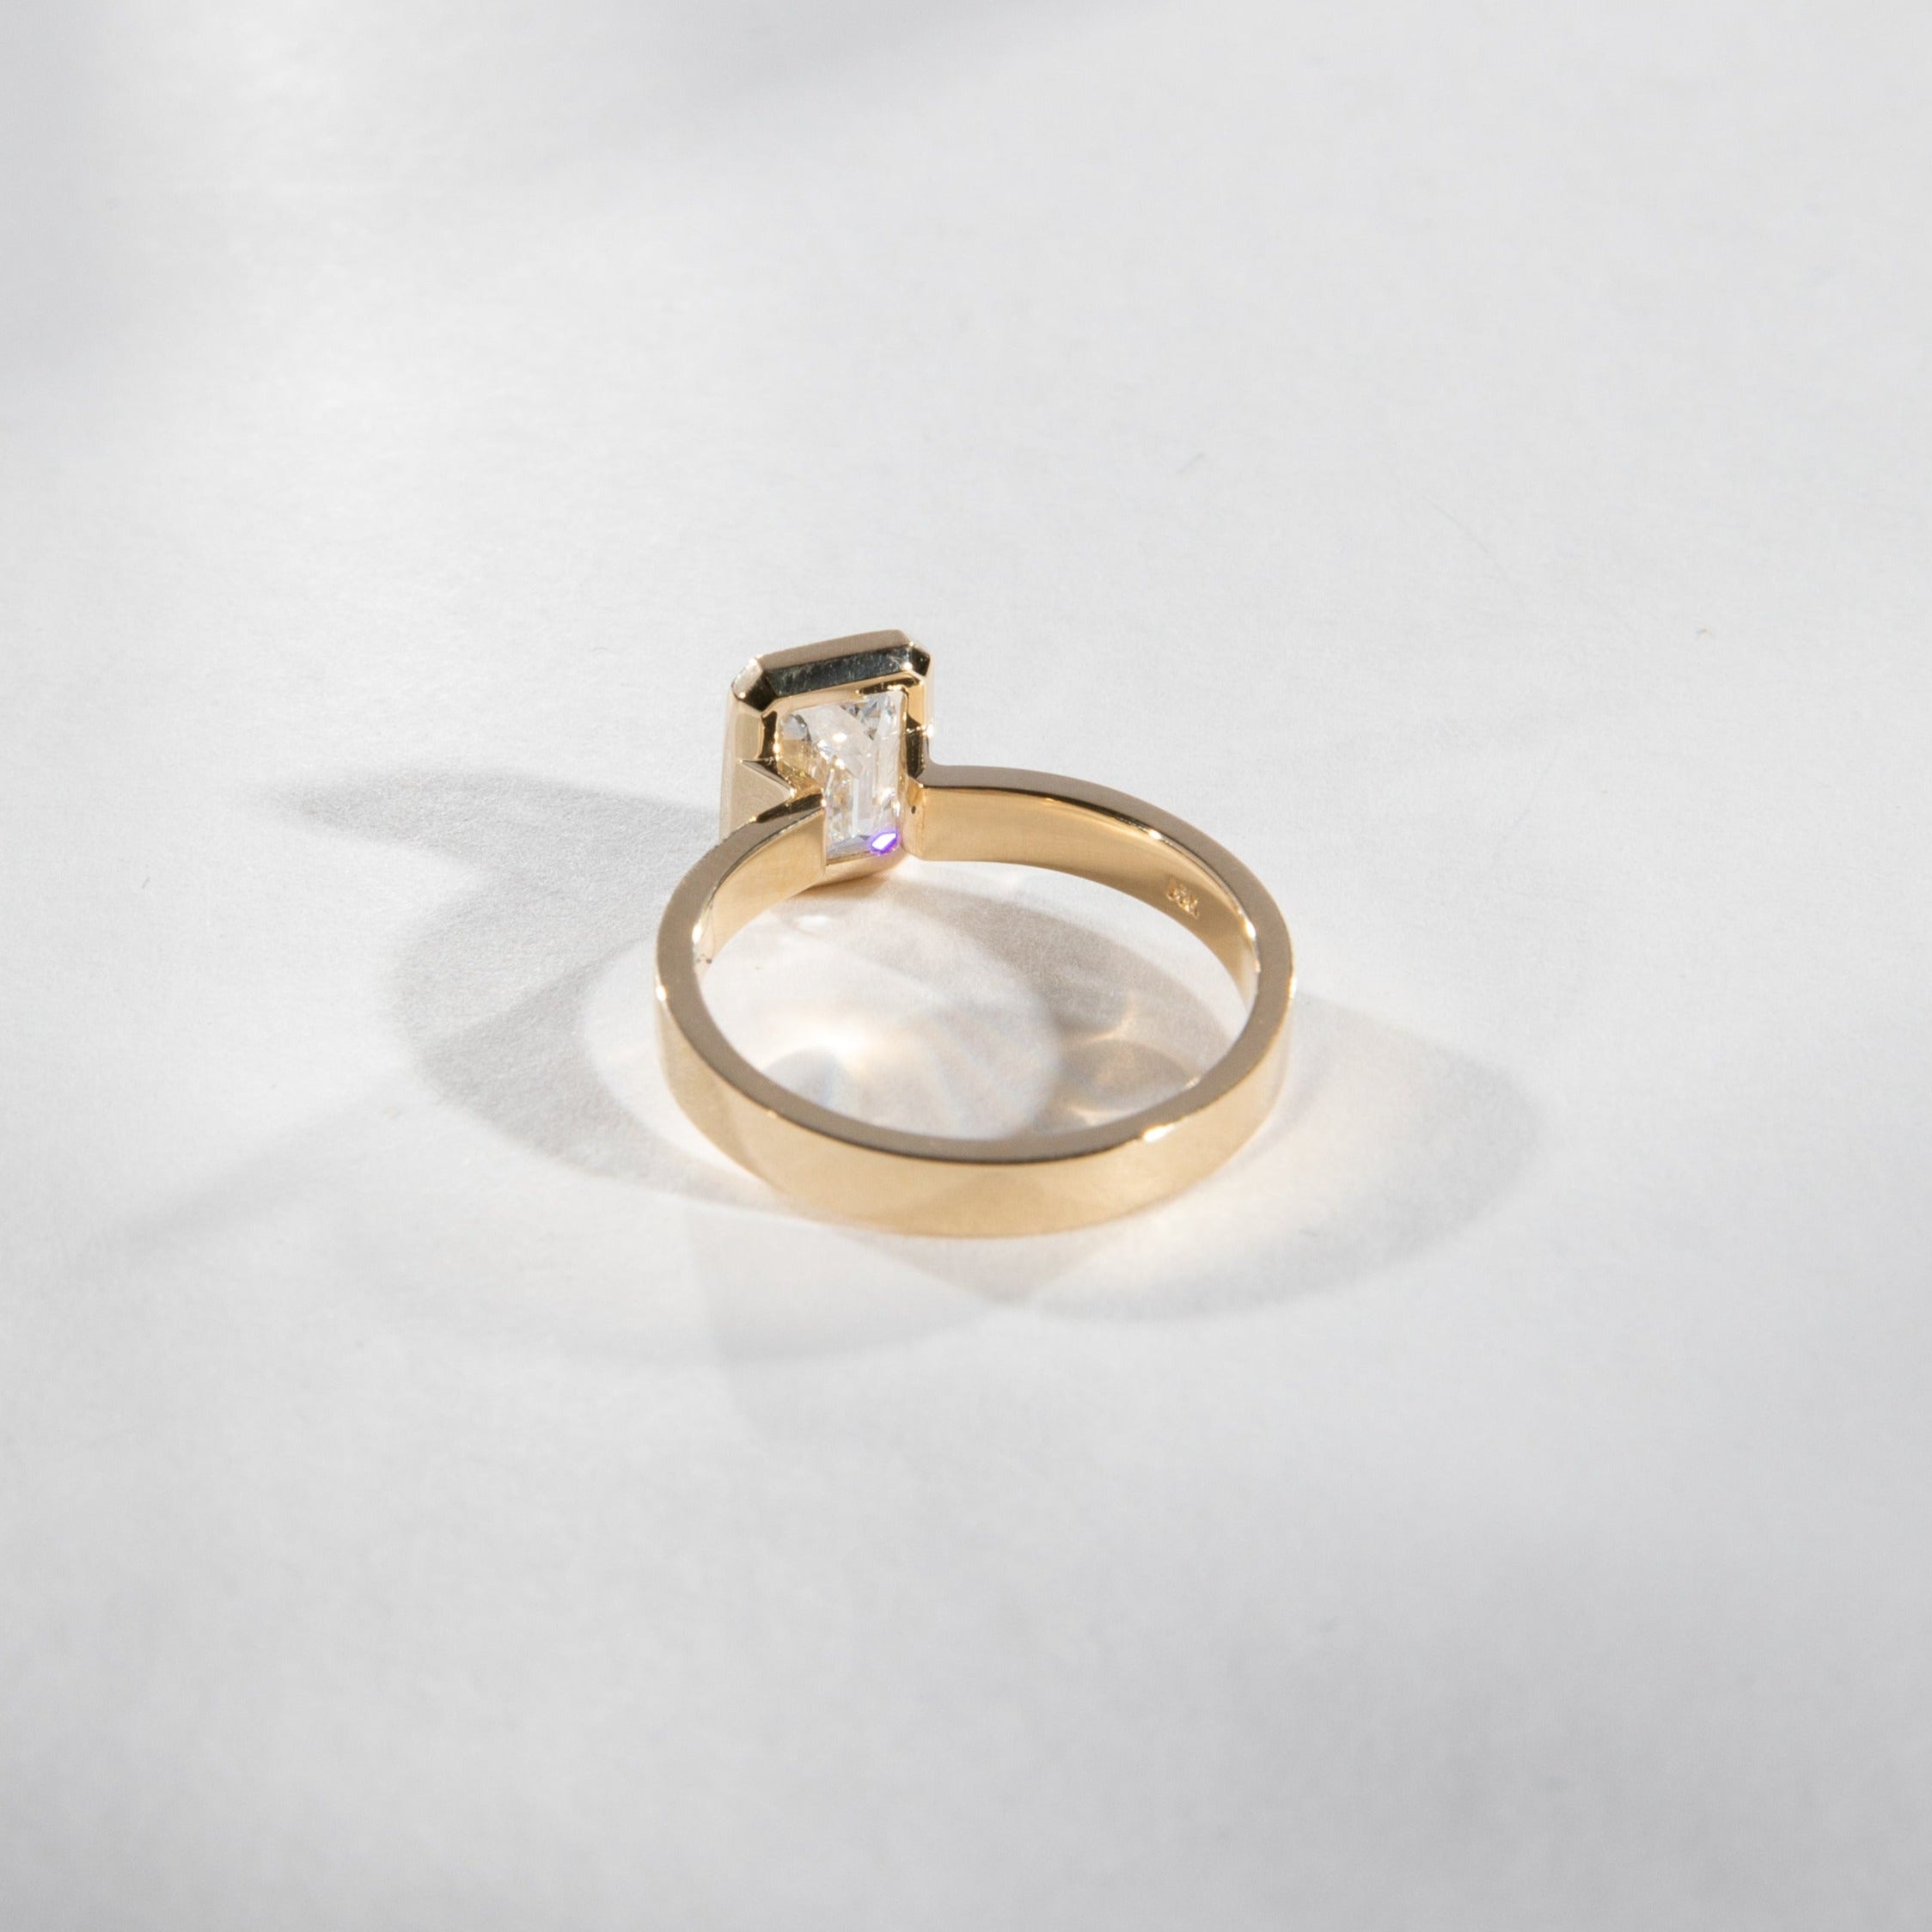 Badi cool ring in 14k Yellow Gold set with a lab-grown diamond